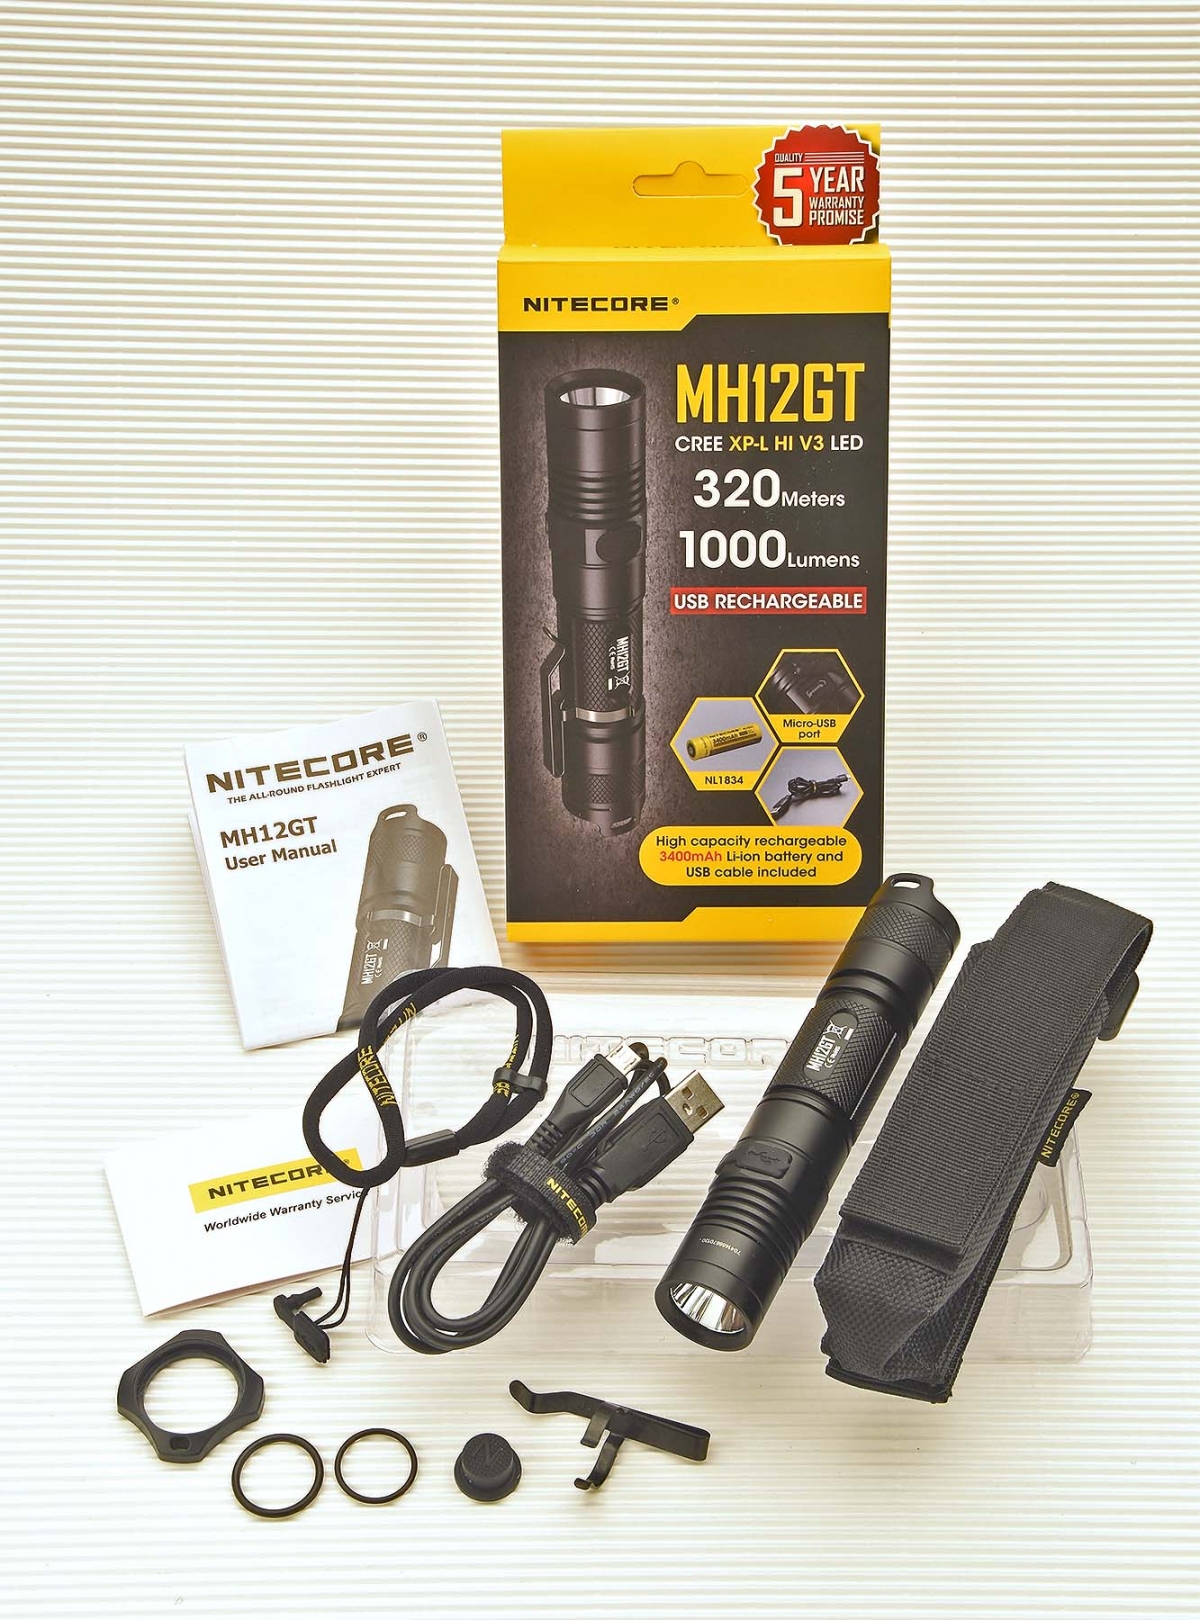 The new Nitecore MH12GT flashlight